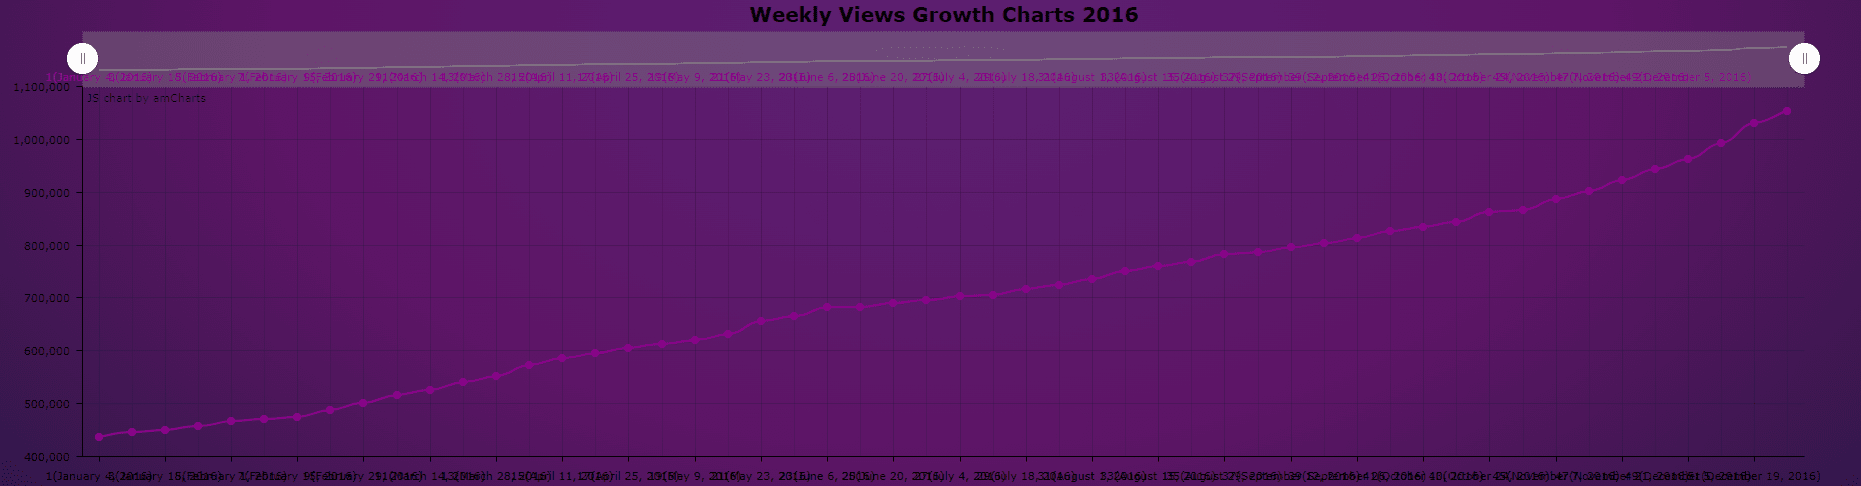 Weekly views growth charts 2016 - StreamBee